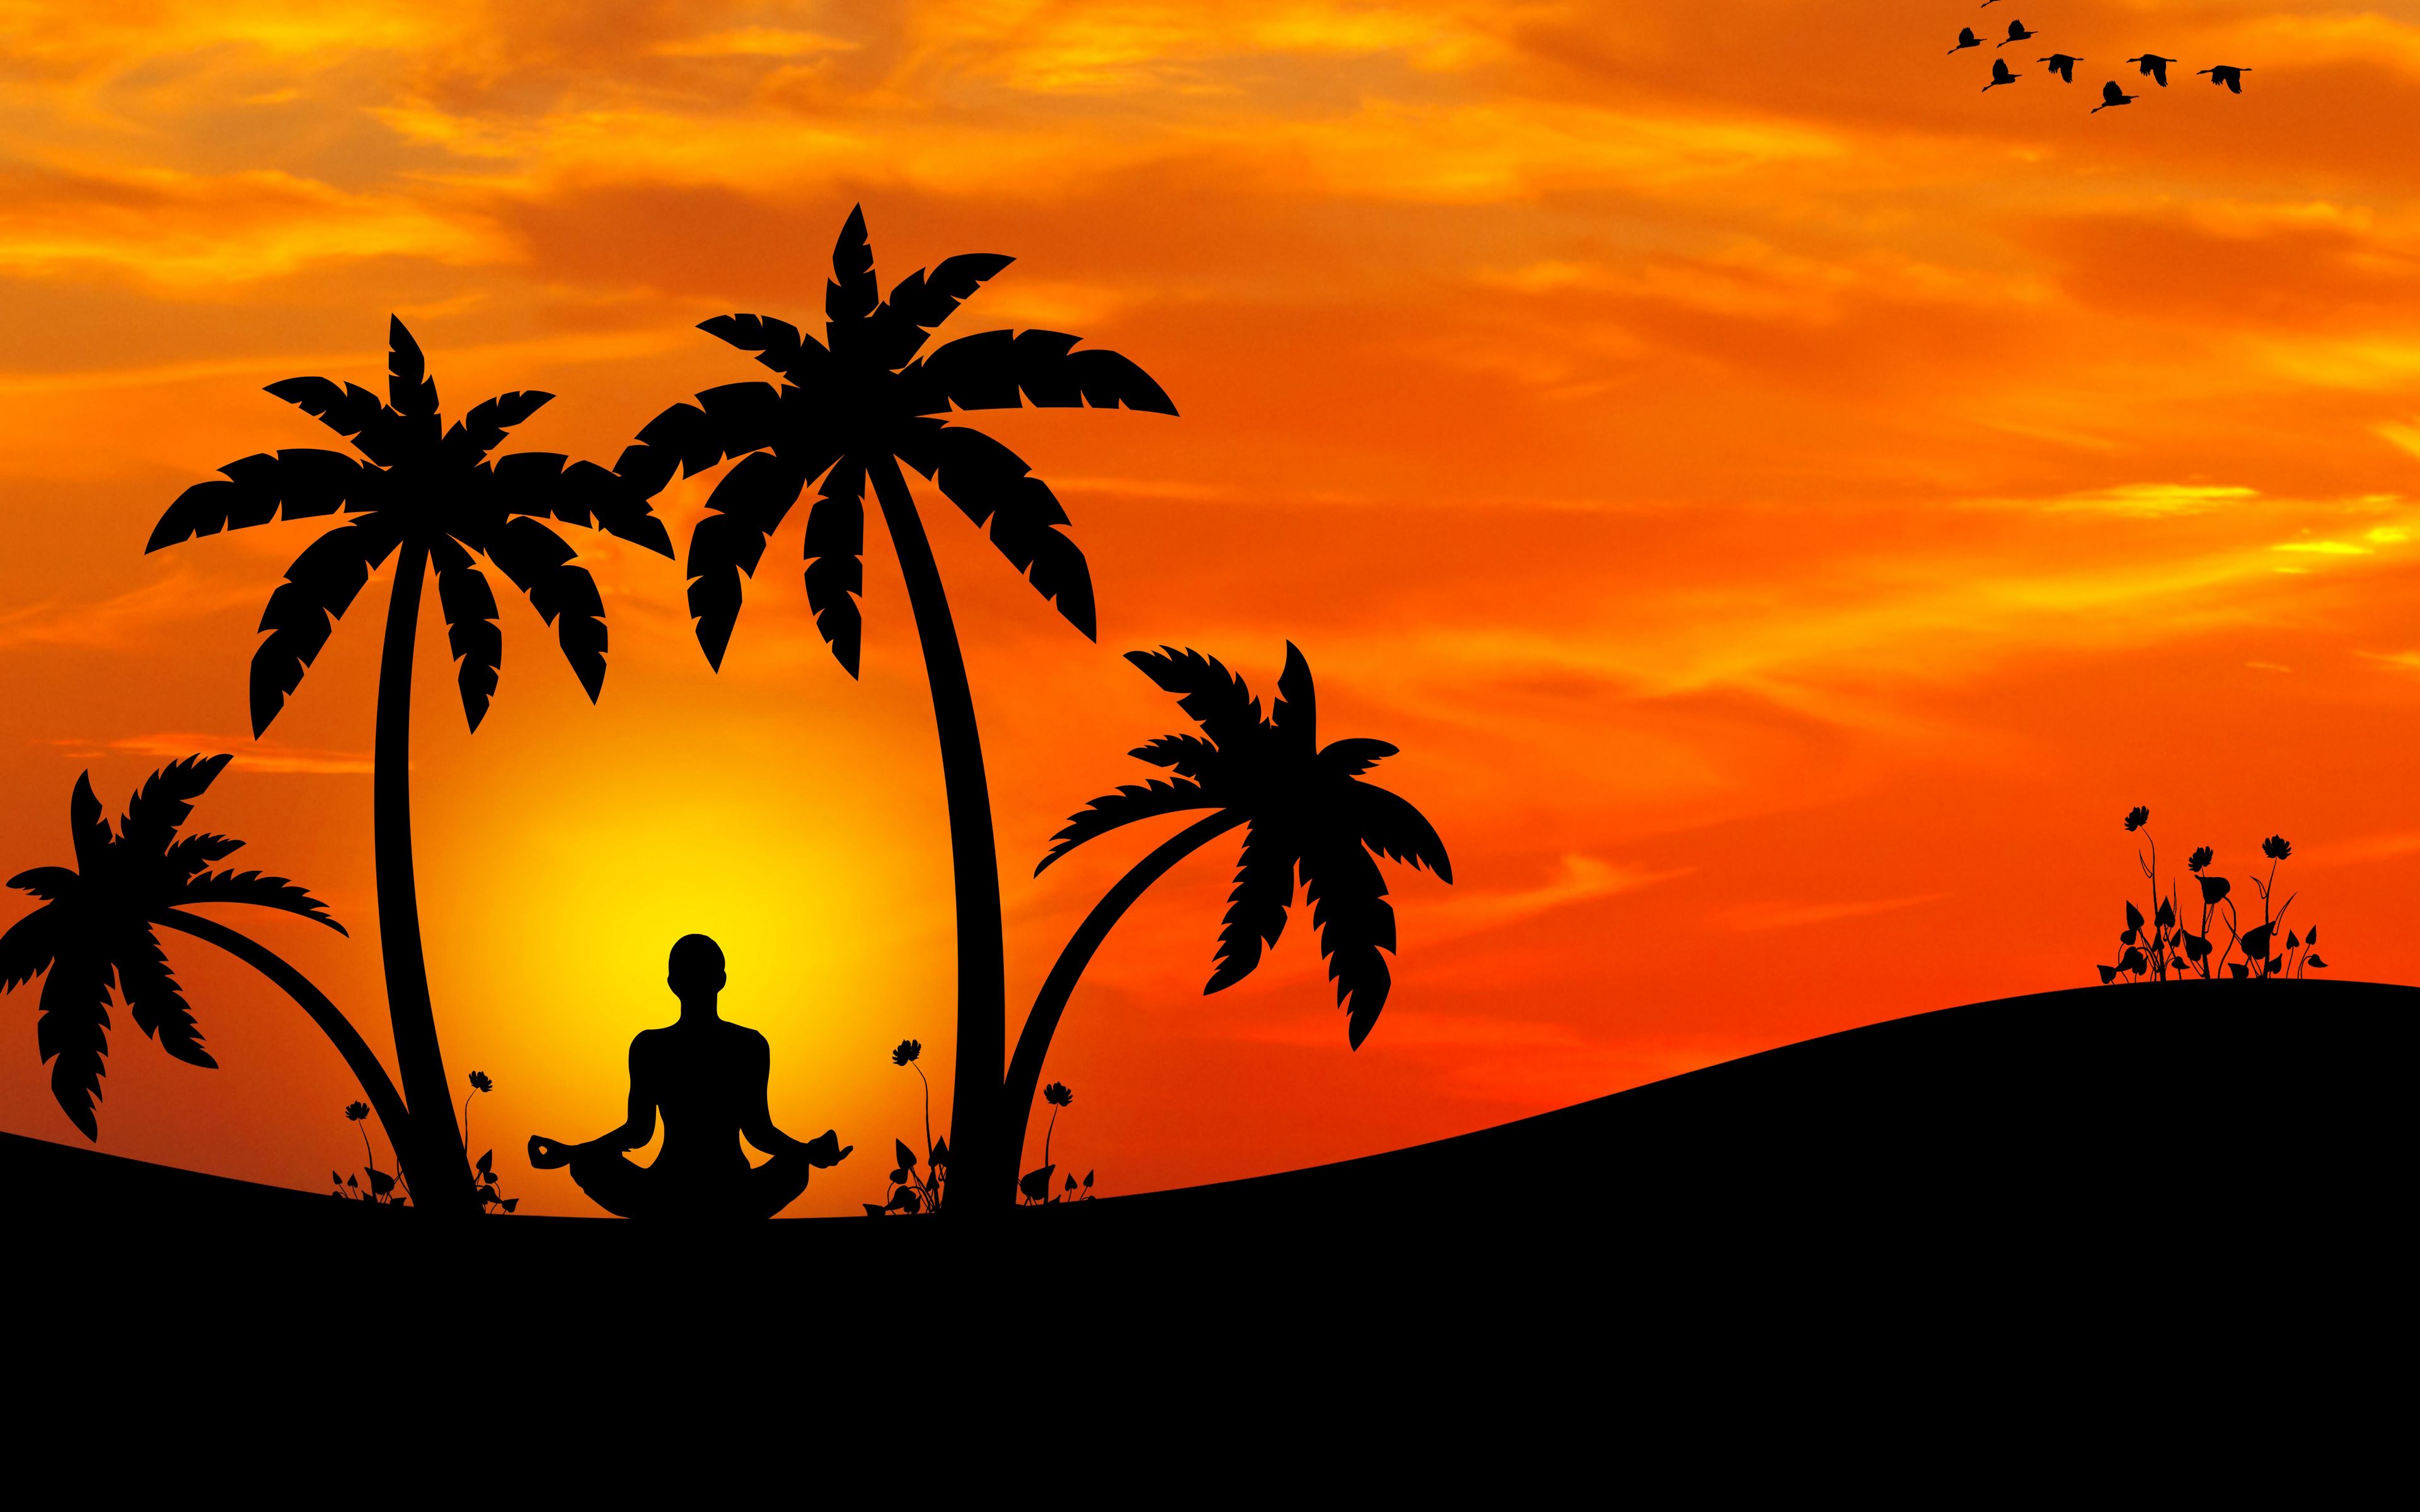 Download wallpaper 3840x2400 meditation, yoga, silhouette, palm trees,  harmony 4k ultra hd 16:10 hd background